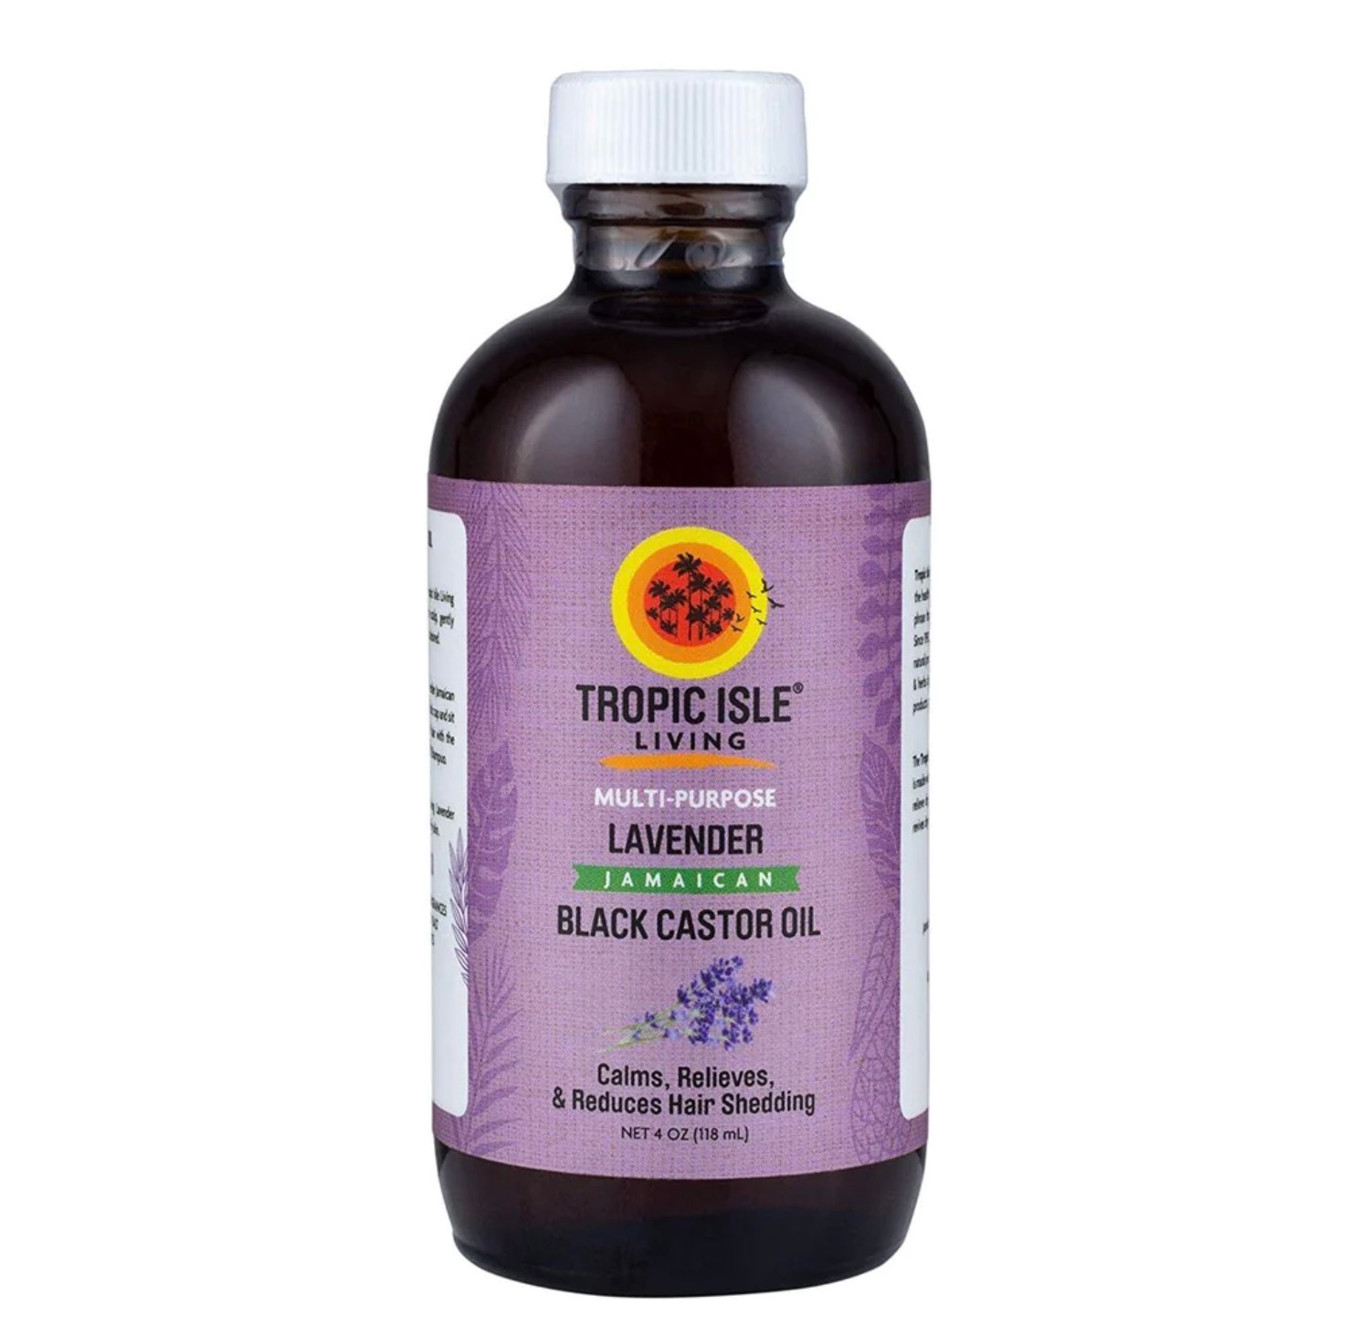 Tropic Isle Living 100% Natural Jamaican Black Castor Oil - Lavender